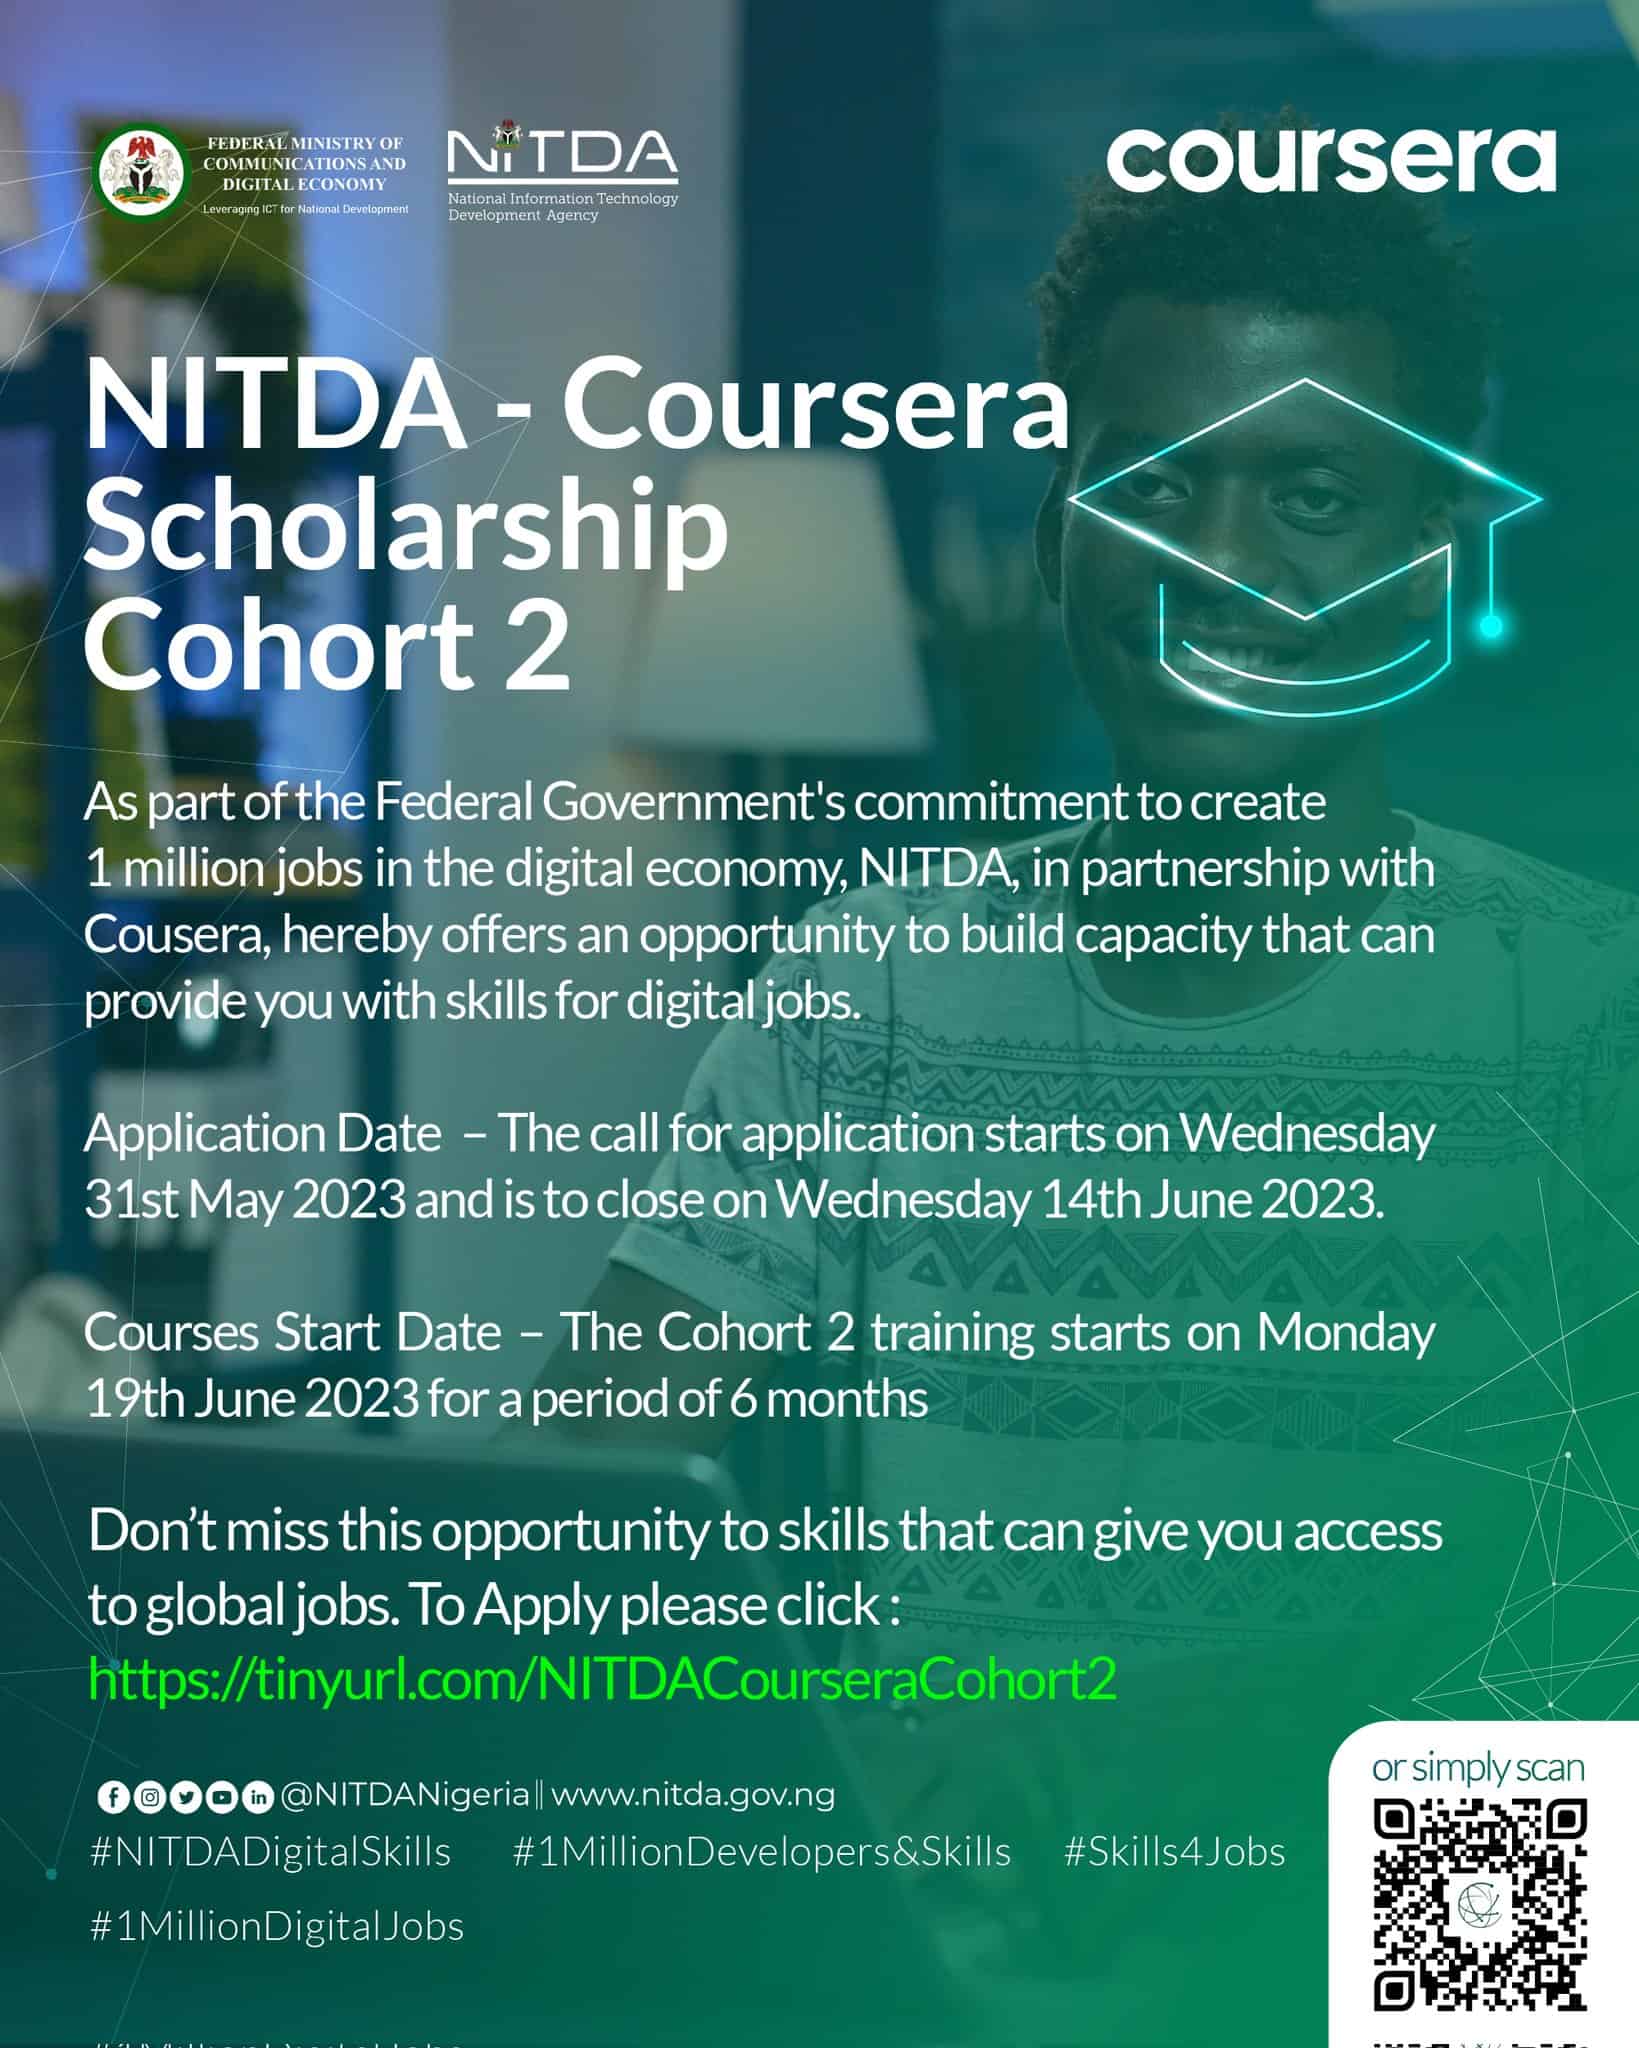 NITDA/Coursera Scholarship Program